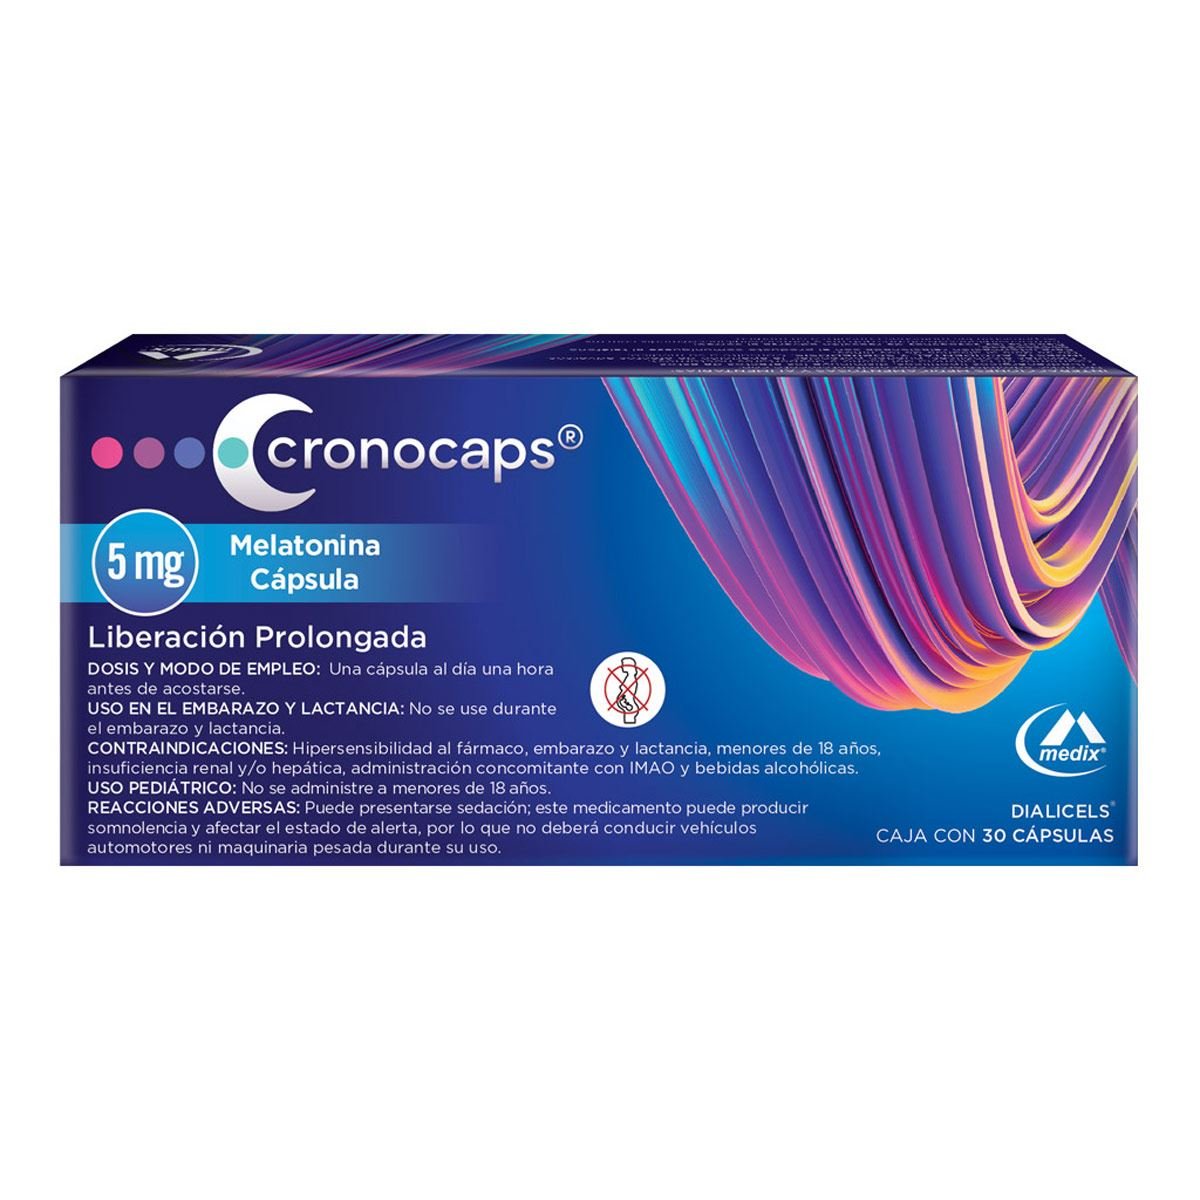 Cronocaps® 5 mg 30 cápsulas de 5 mg. Melatonina